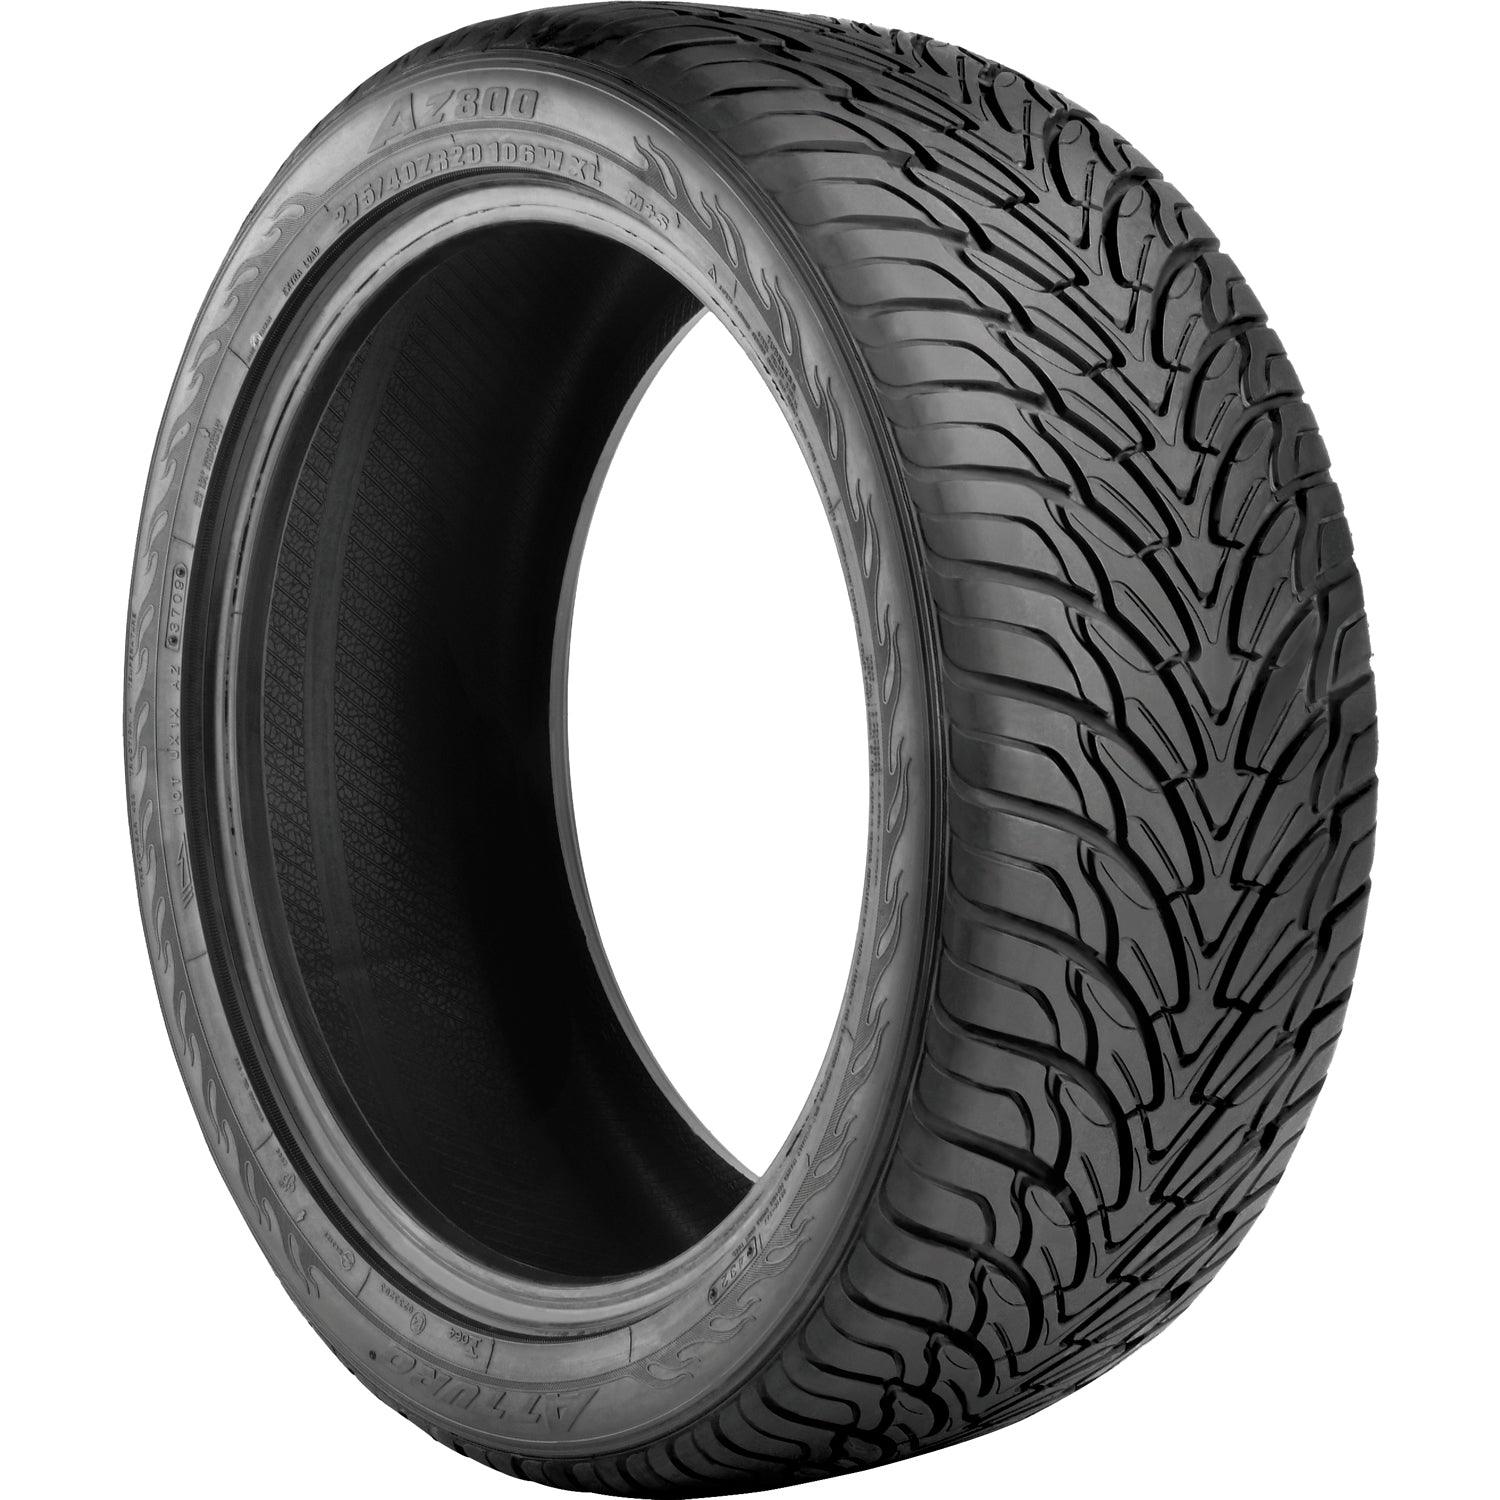 ATTURO AZ800 235/60R17 (28.4X9.4R 17) Tires